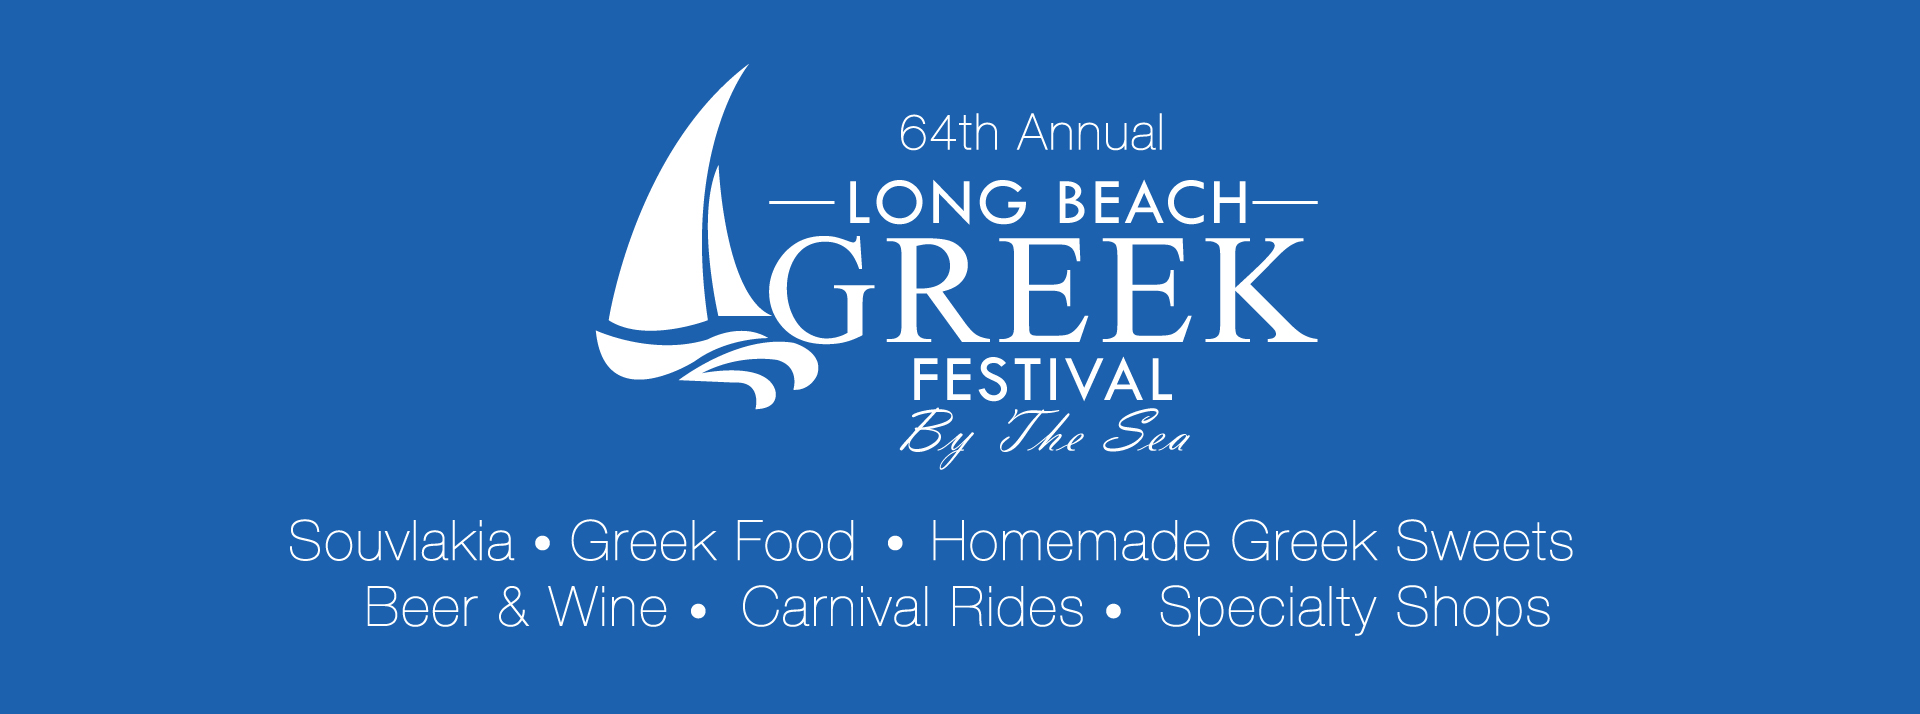 The Long Beach Greek Festival and Cultural Event The Long Beach Greek